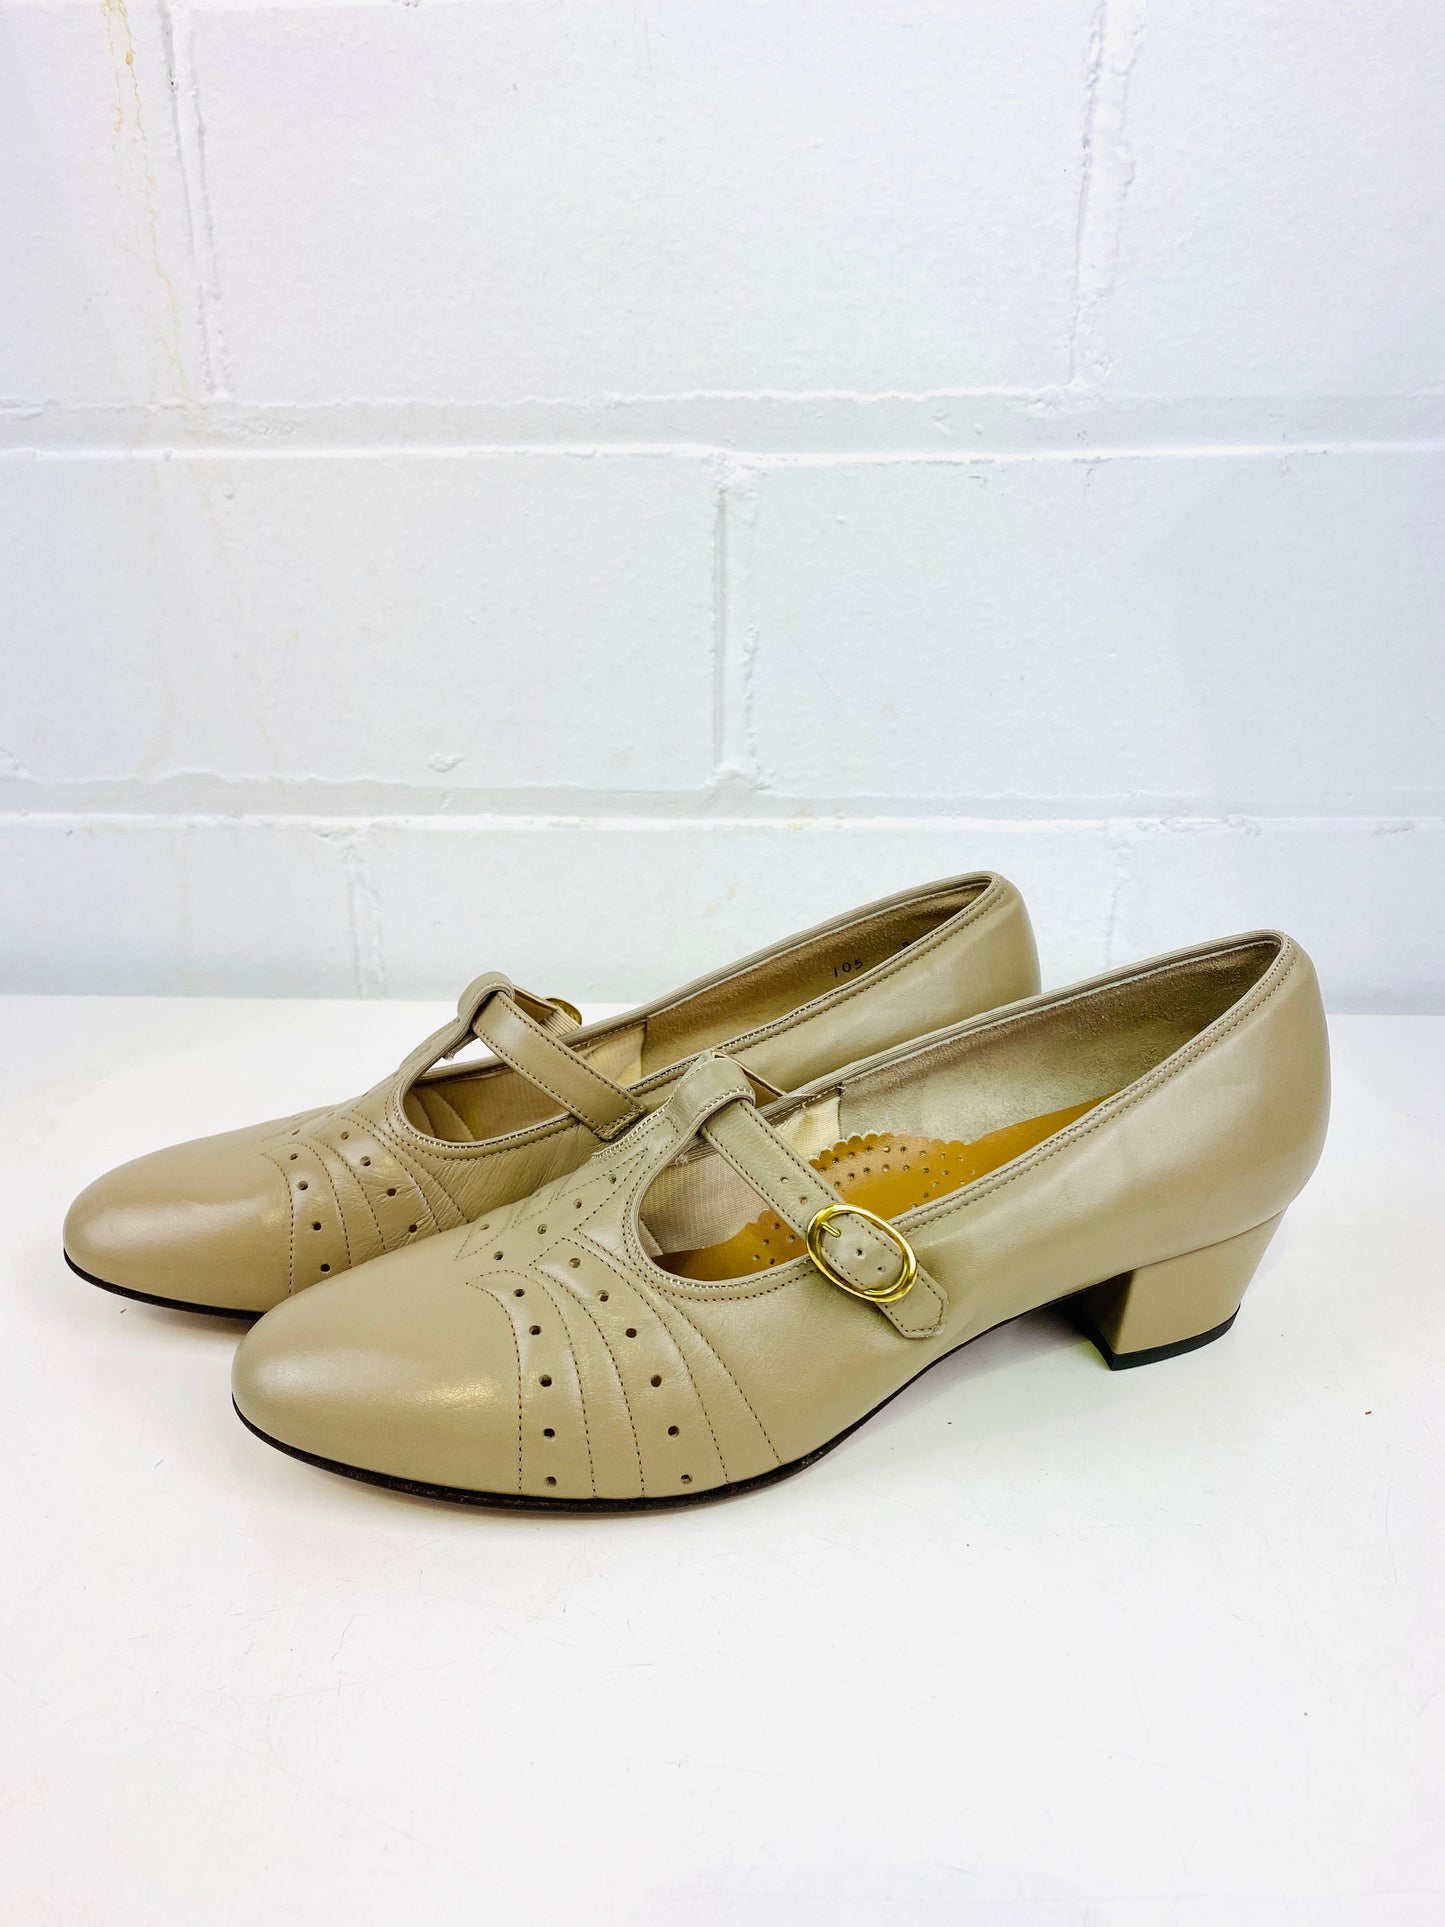 Vintage Deadstock Shoes, Women's 1980s Taupe Leather Cuban Heel T-Strap Pumps, NOS, 8244